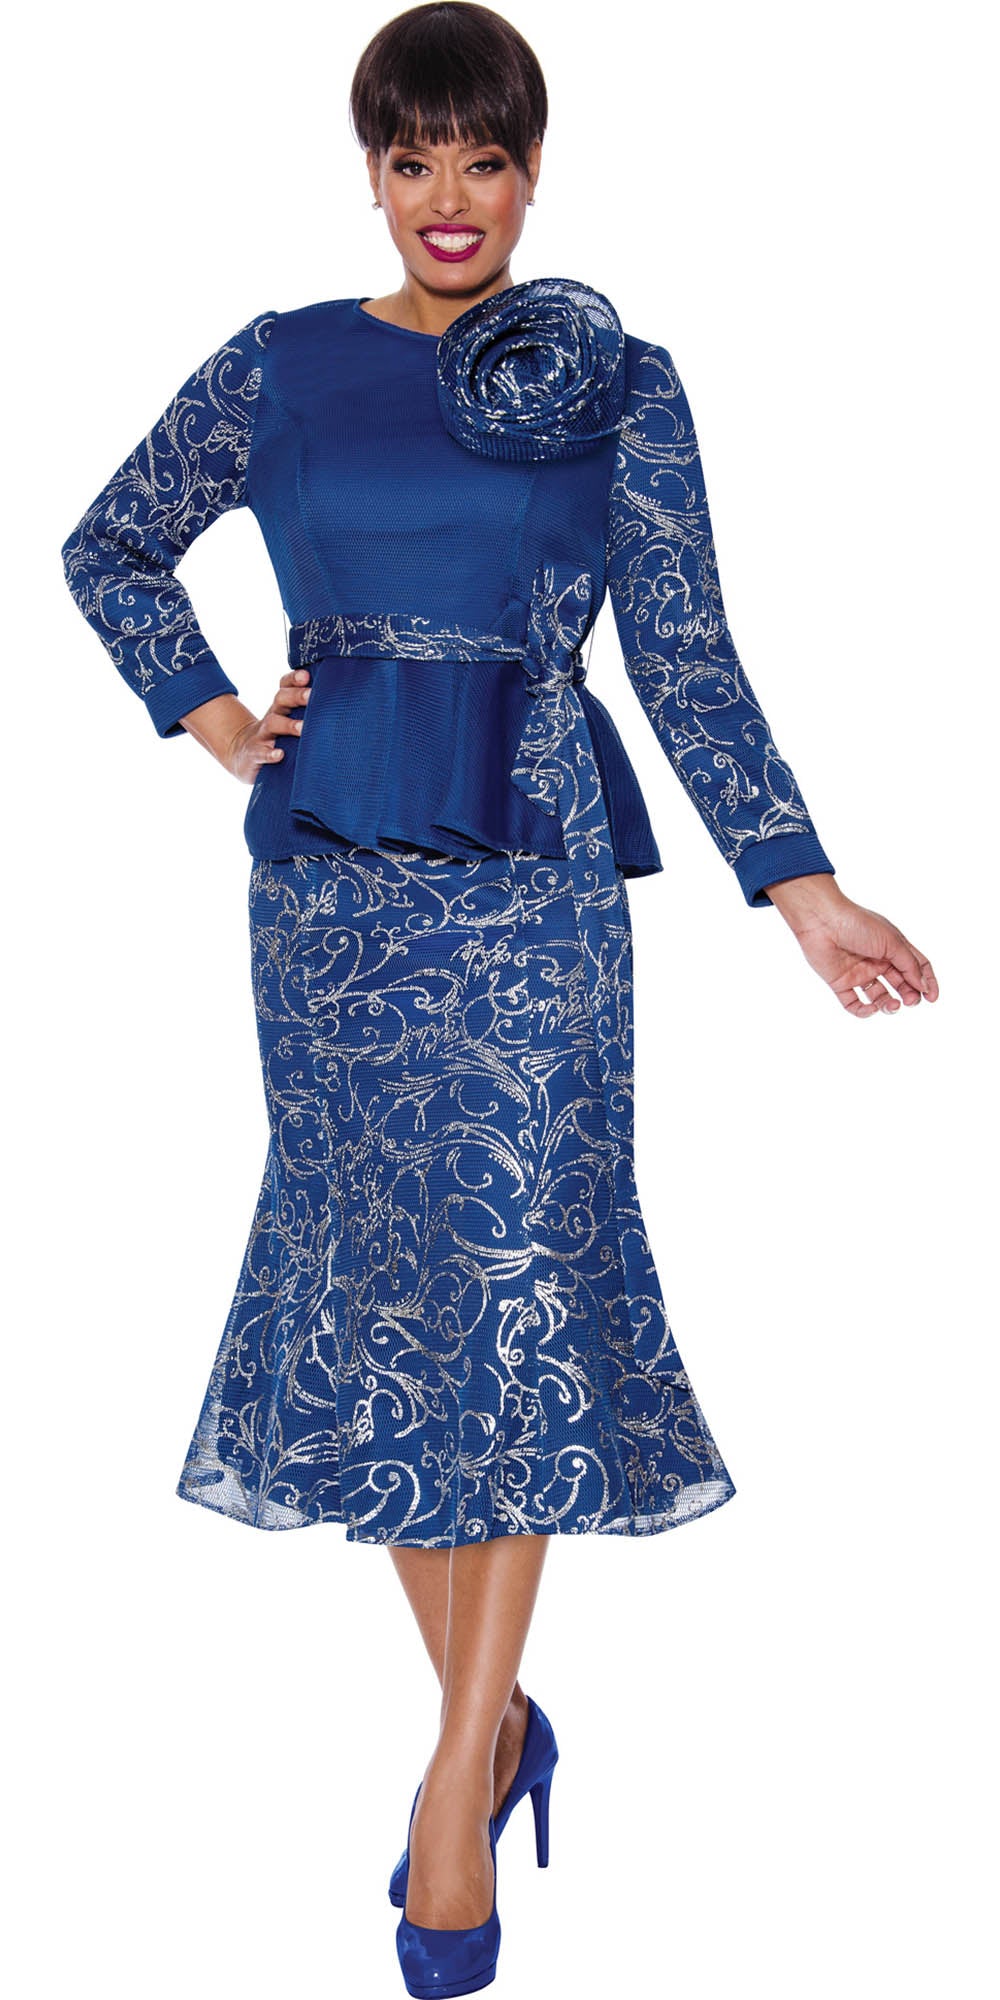 Stellar Looks - 1852 - Royal - Mesh Fabric Print 2pc Skirt Suit